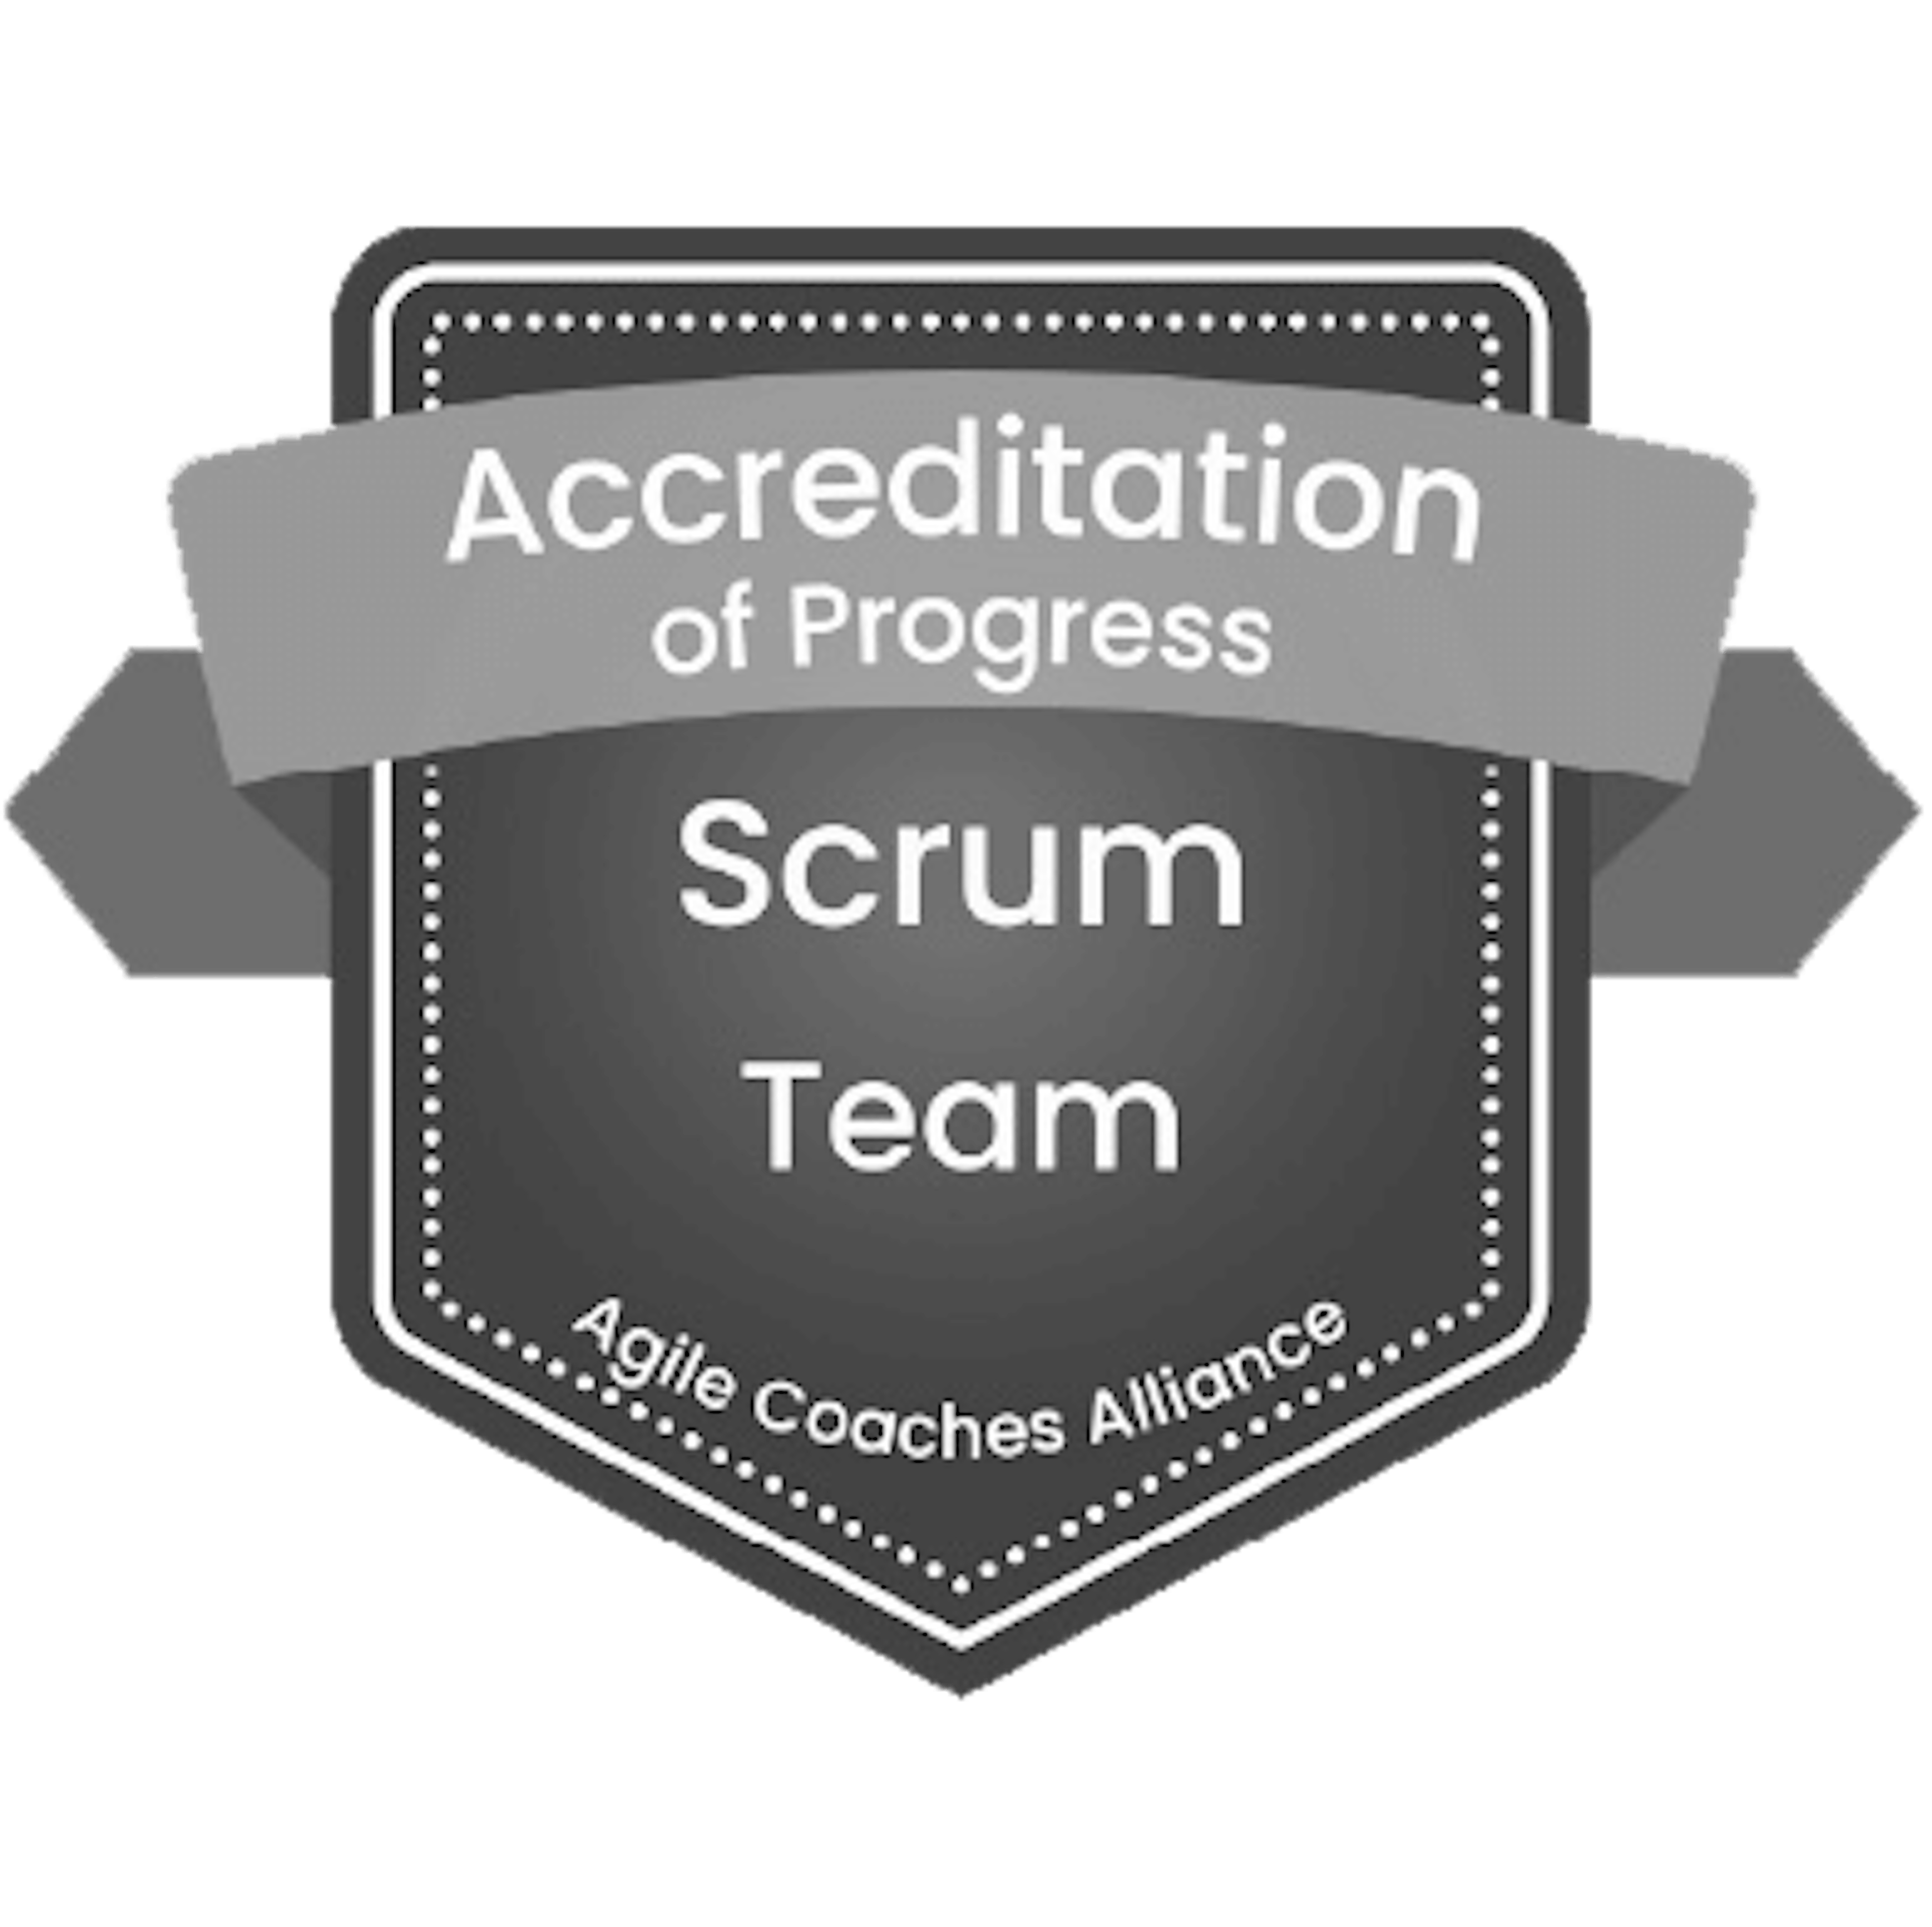 Accreditation of Progress - Scrum Team